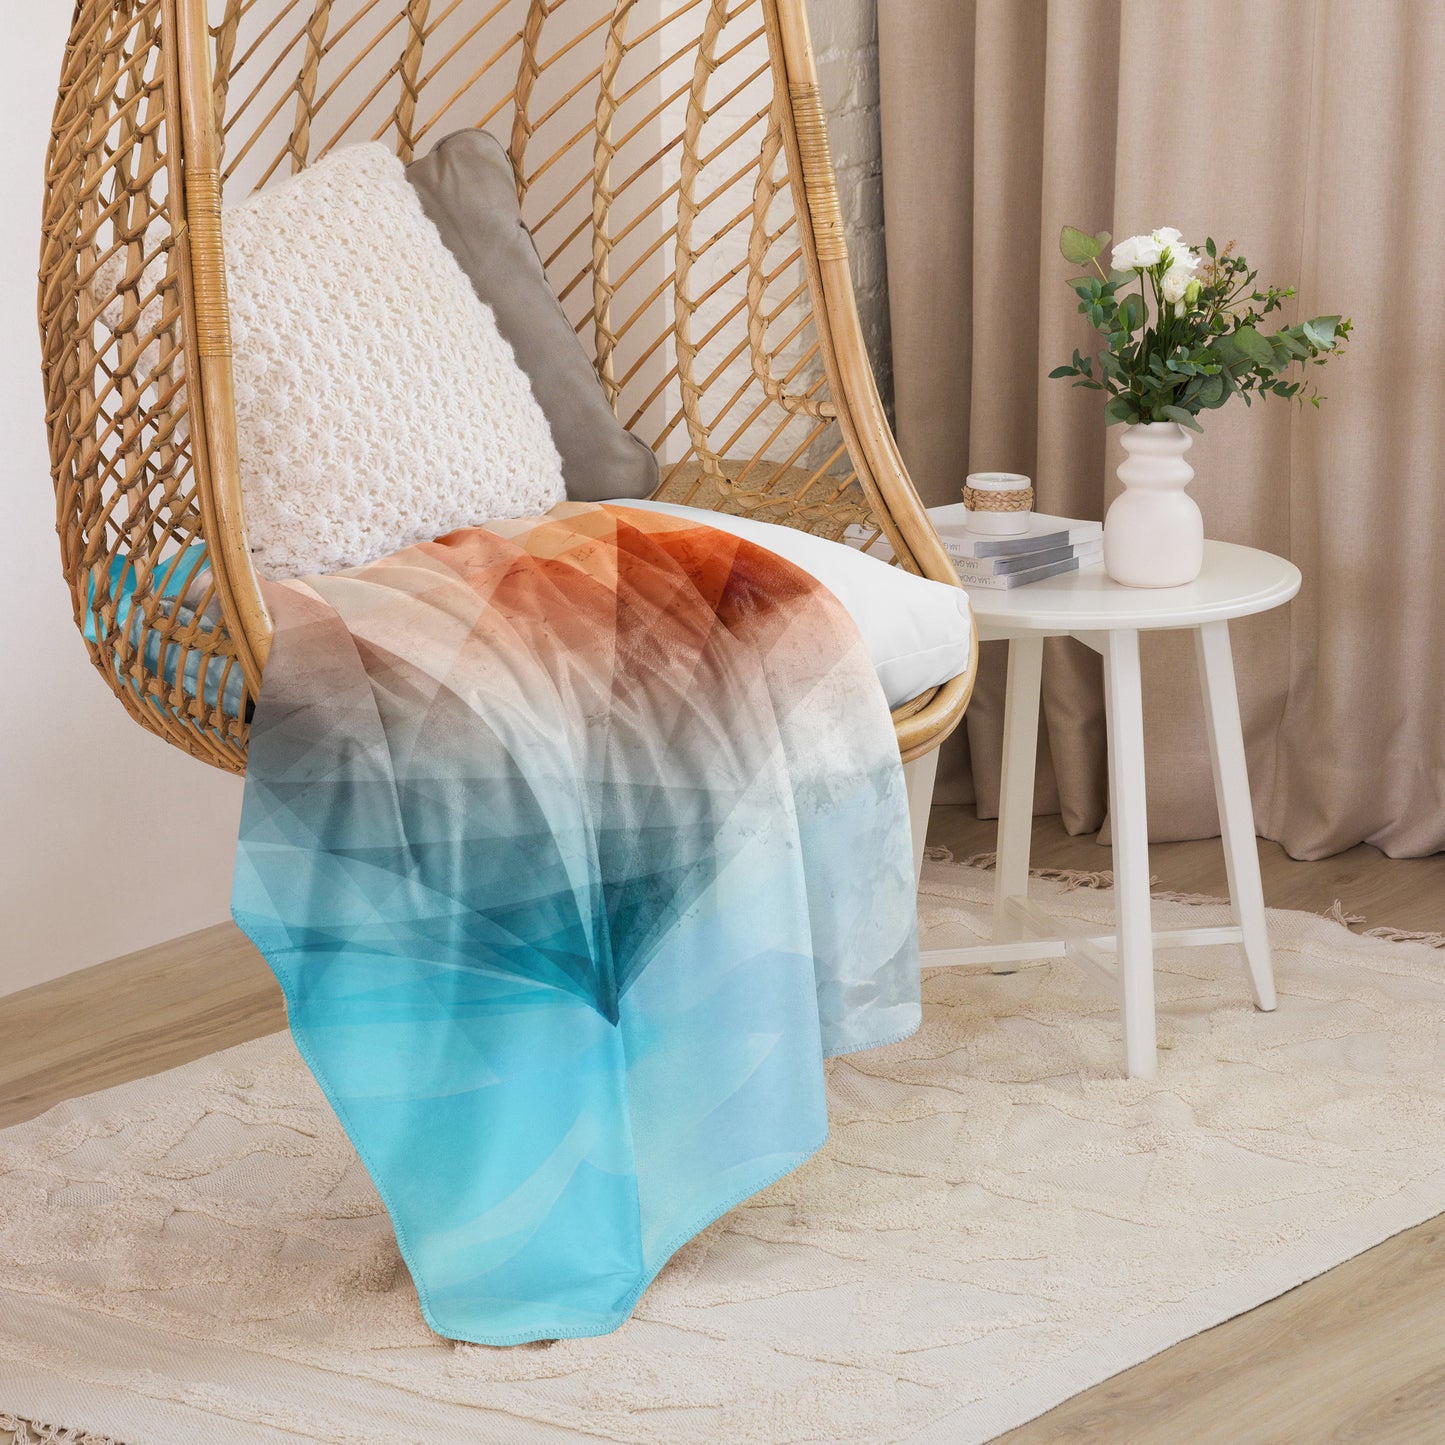 Peach Fuzz & Blue Sherpa Luxury Comfort Blanket - Ultra-Soft, Plush Warmth